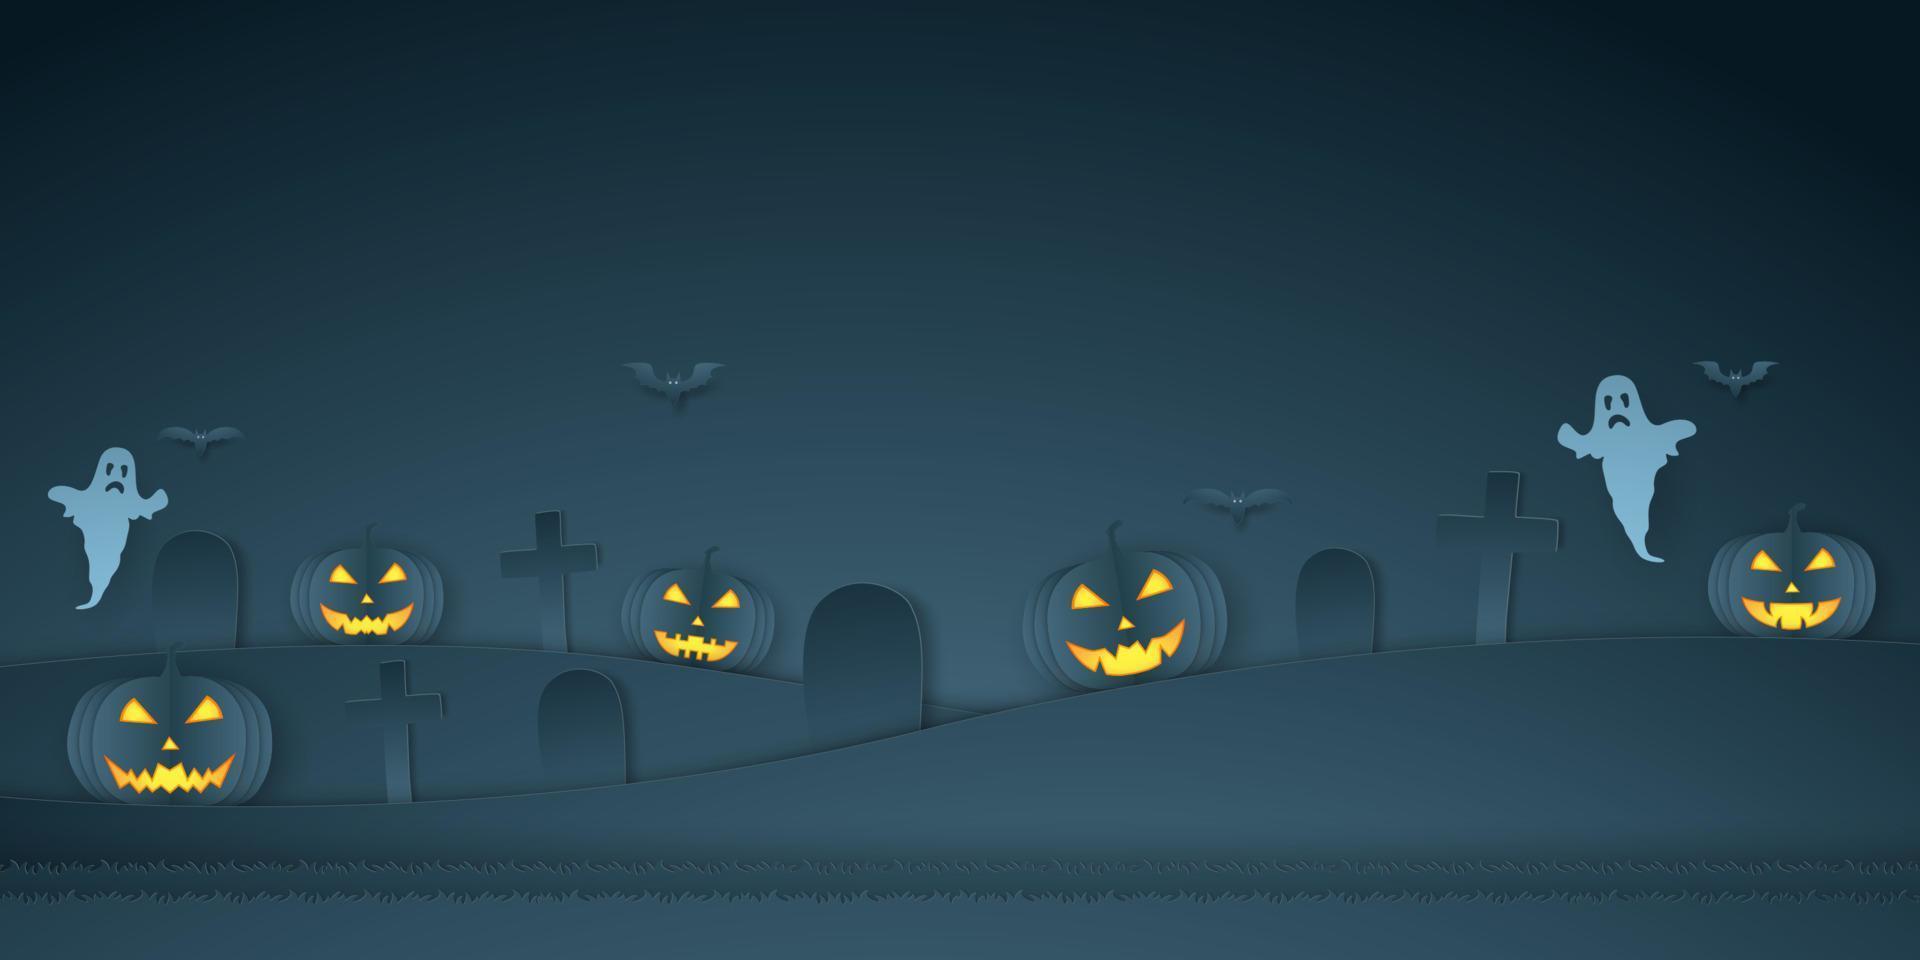 Halloween pumpkin with graveyard, bat and ghost, paper art style vector